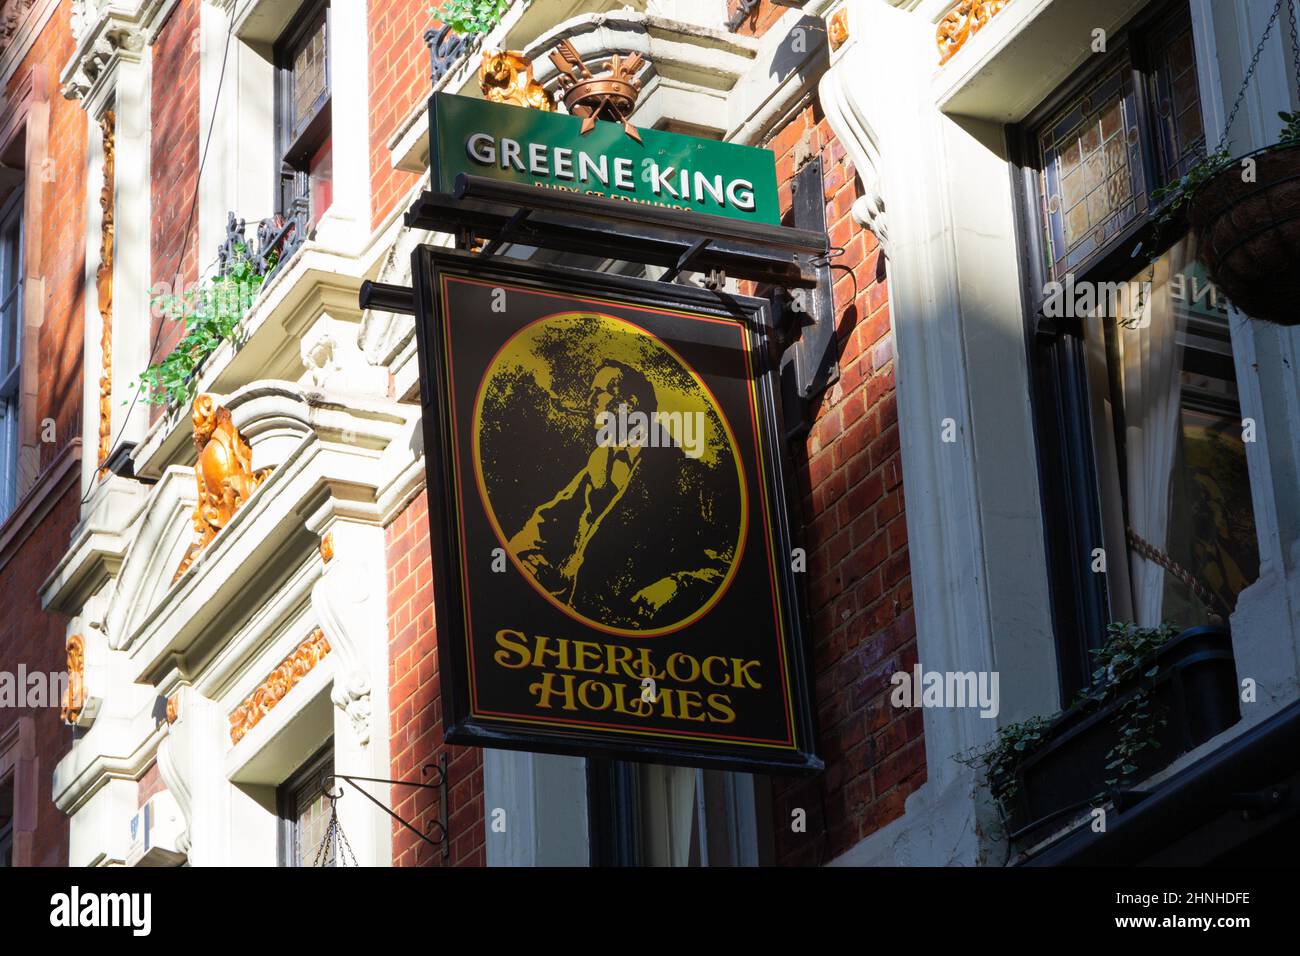 Sherlock holmes pub sign, london, uk Stock Photo